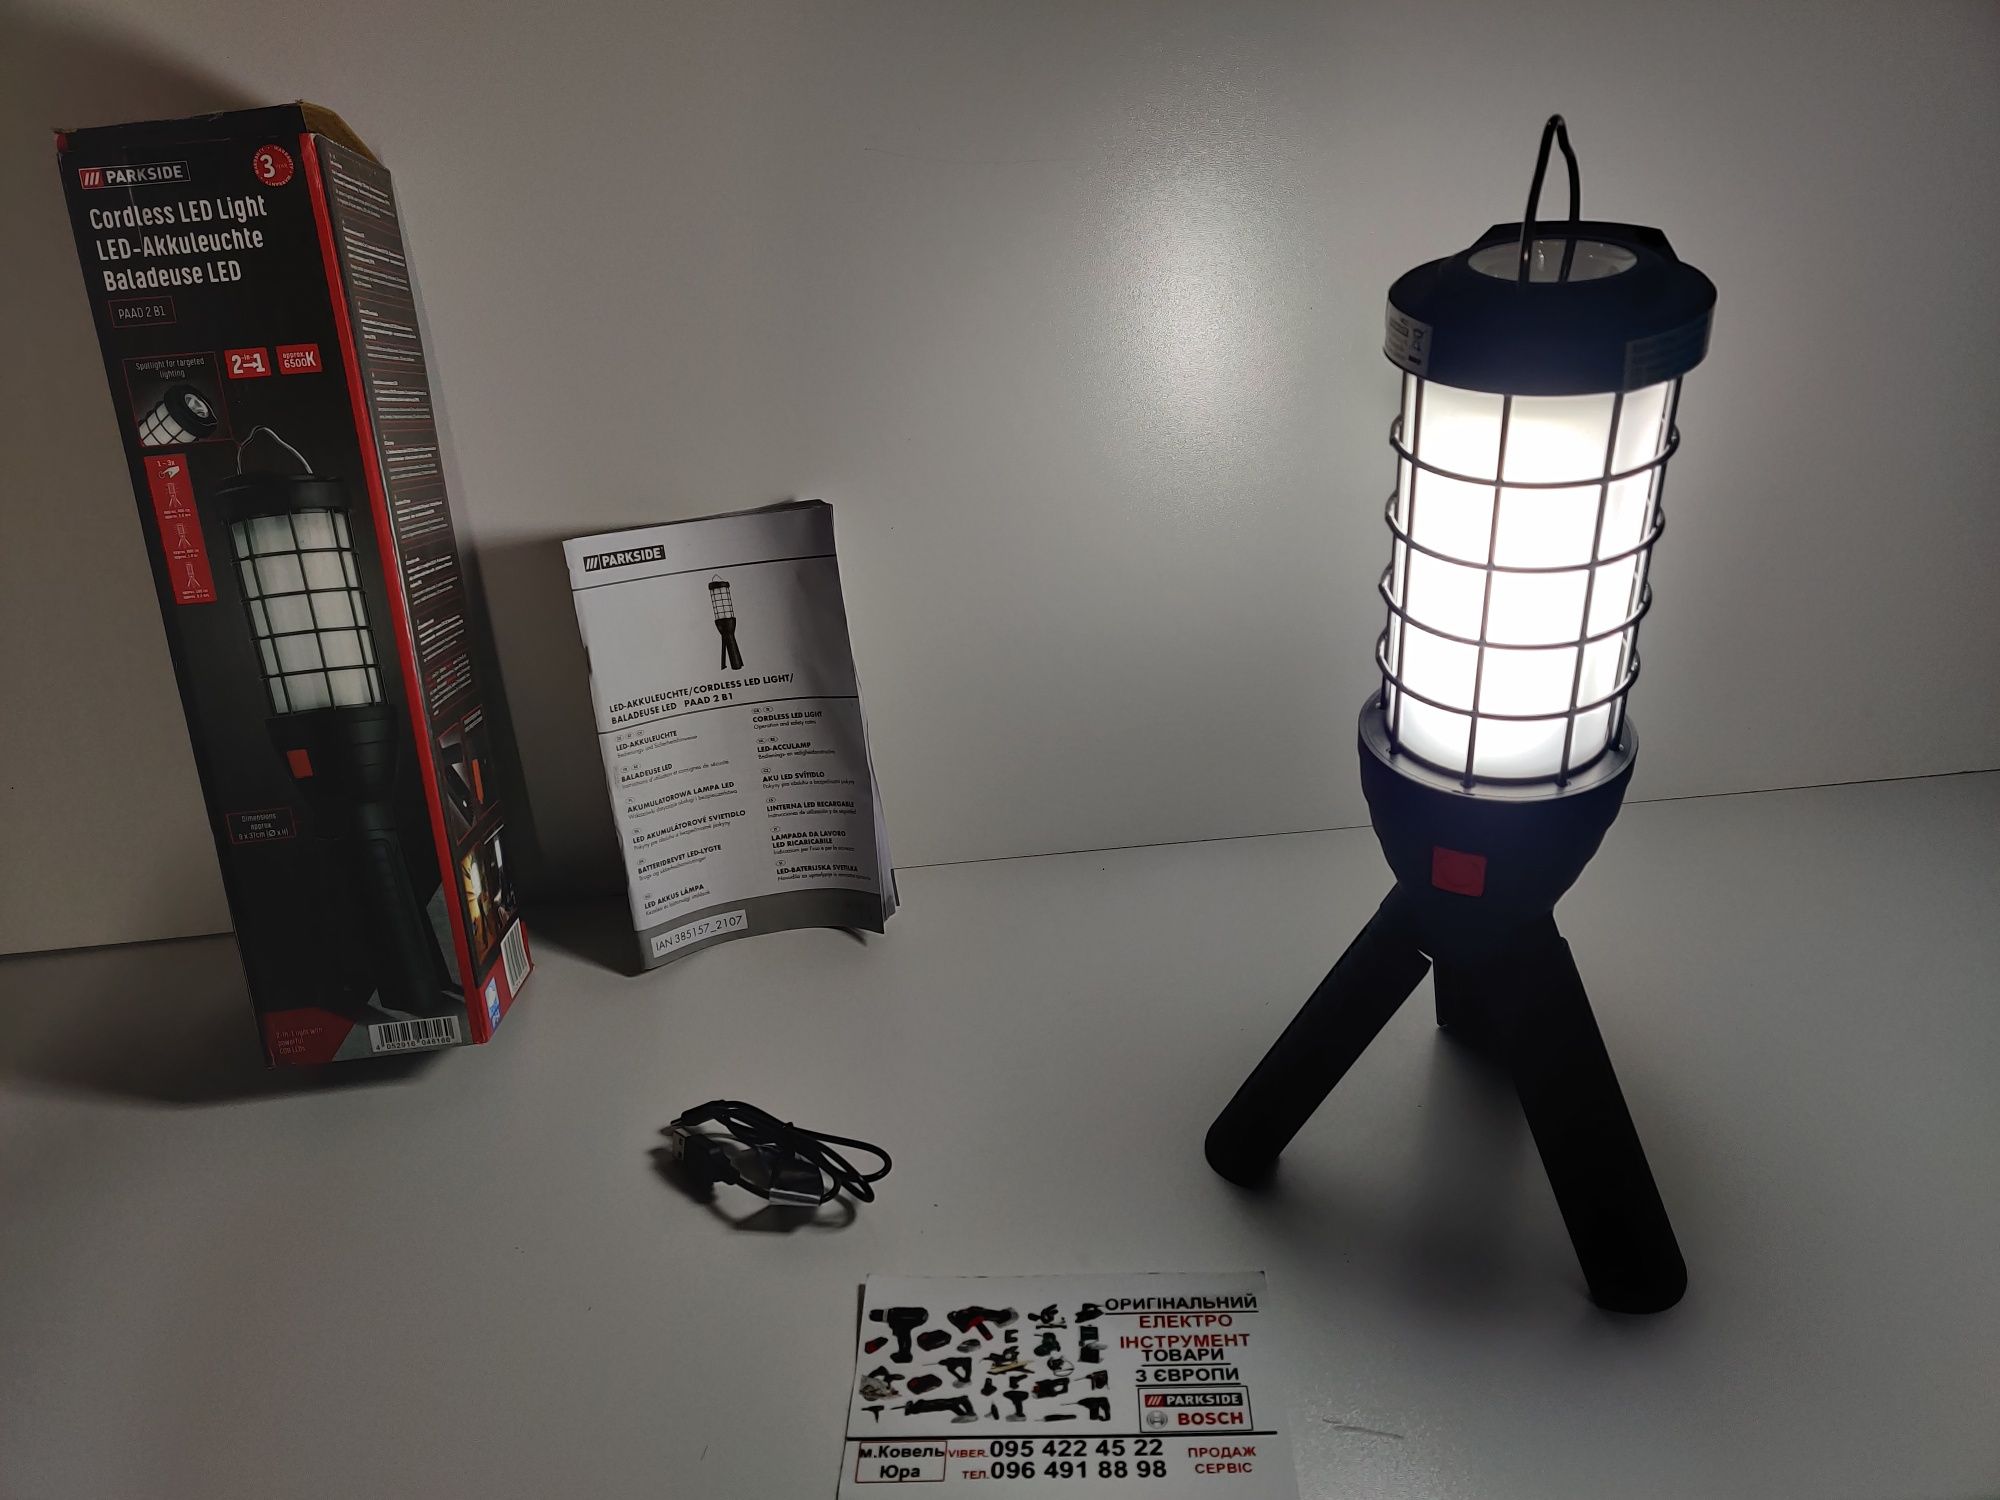 ОРИГИН аккумуляторн фонарь сГермани Parkside PAAD 2/світильник/фанарик